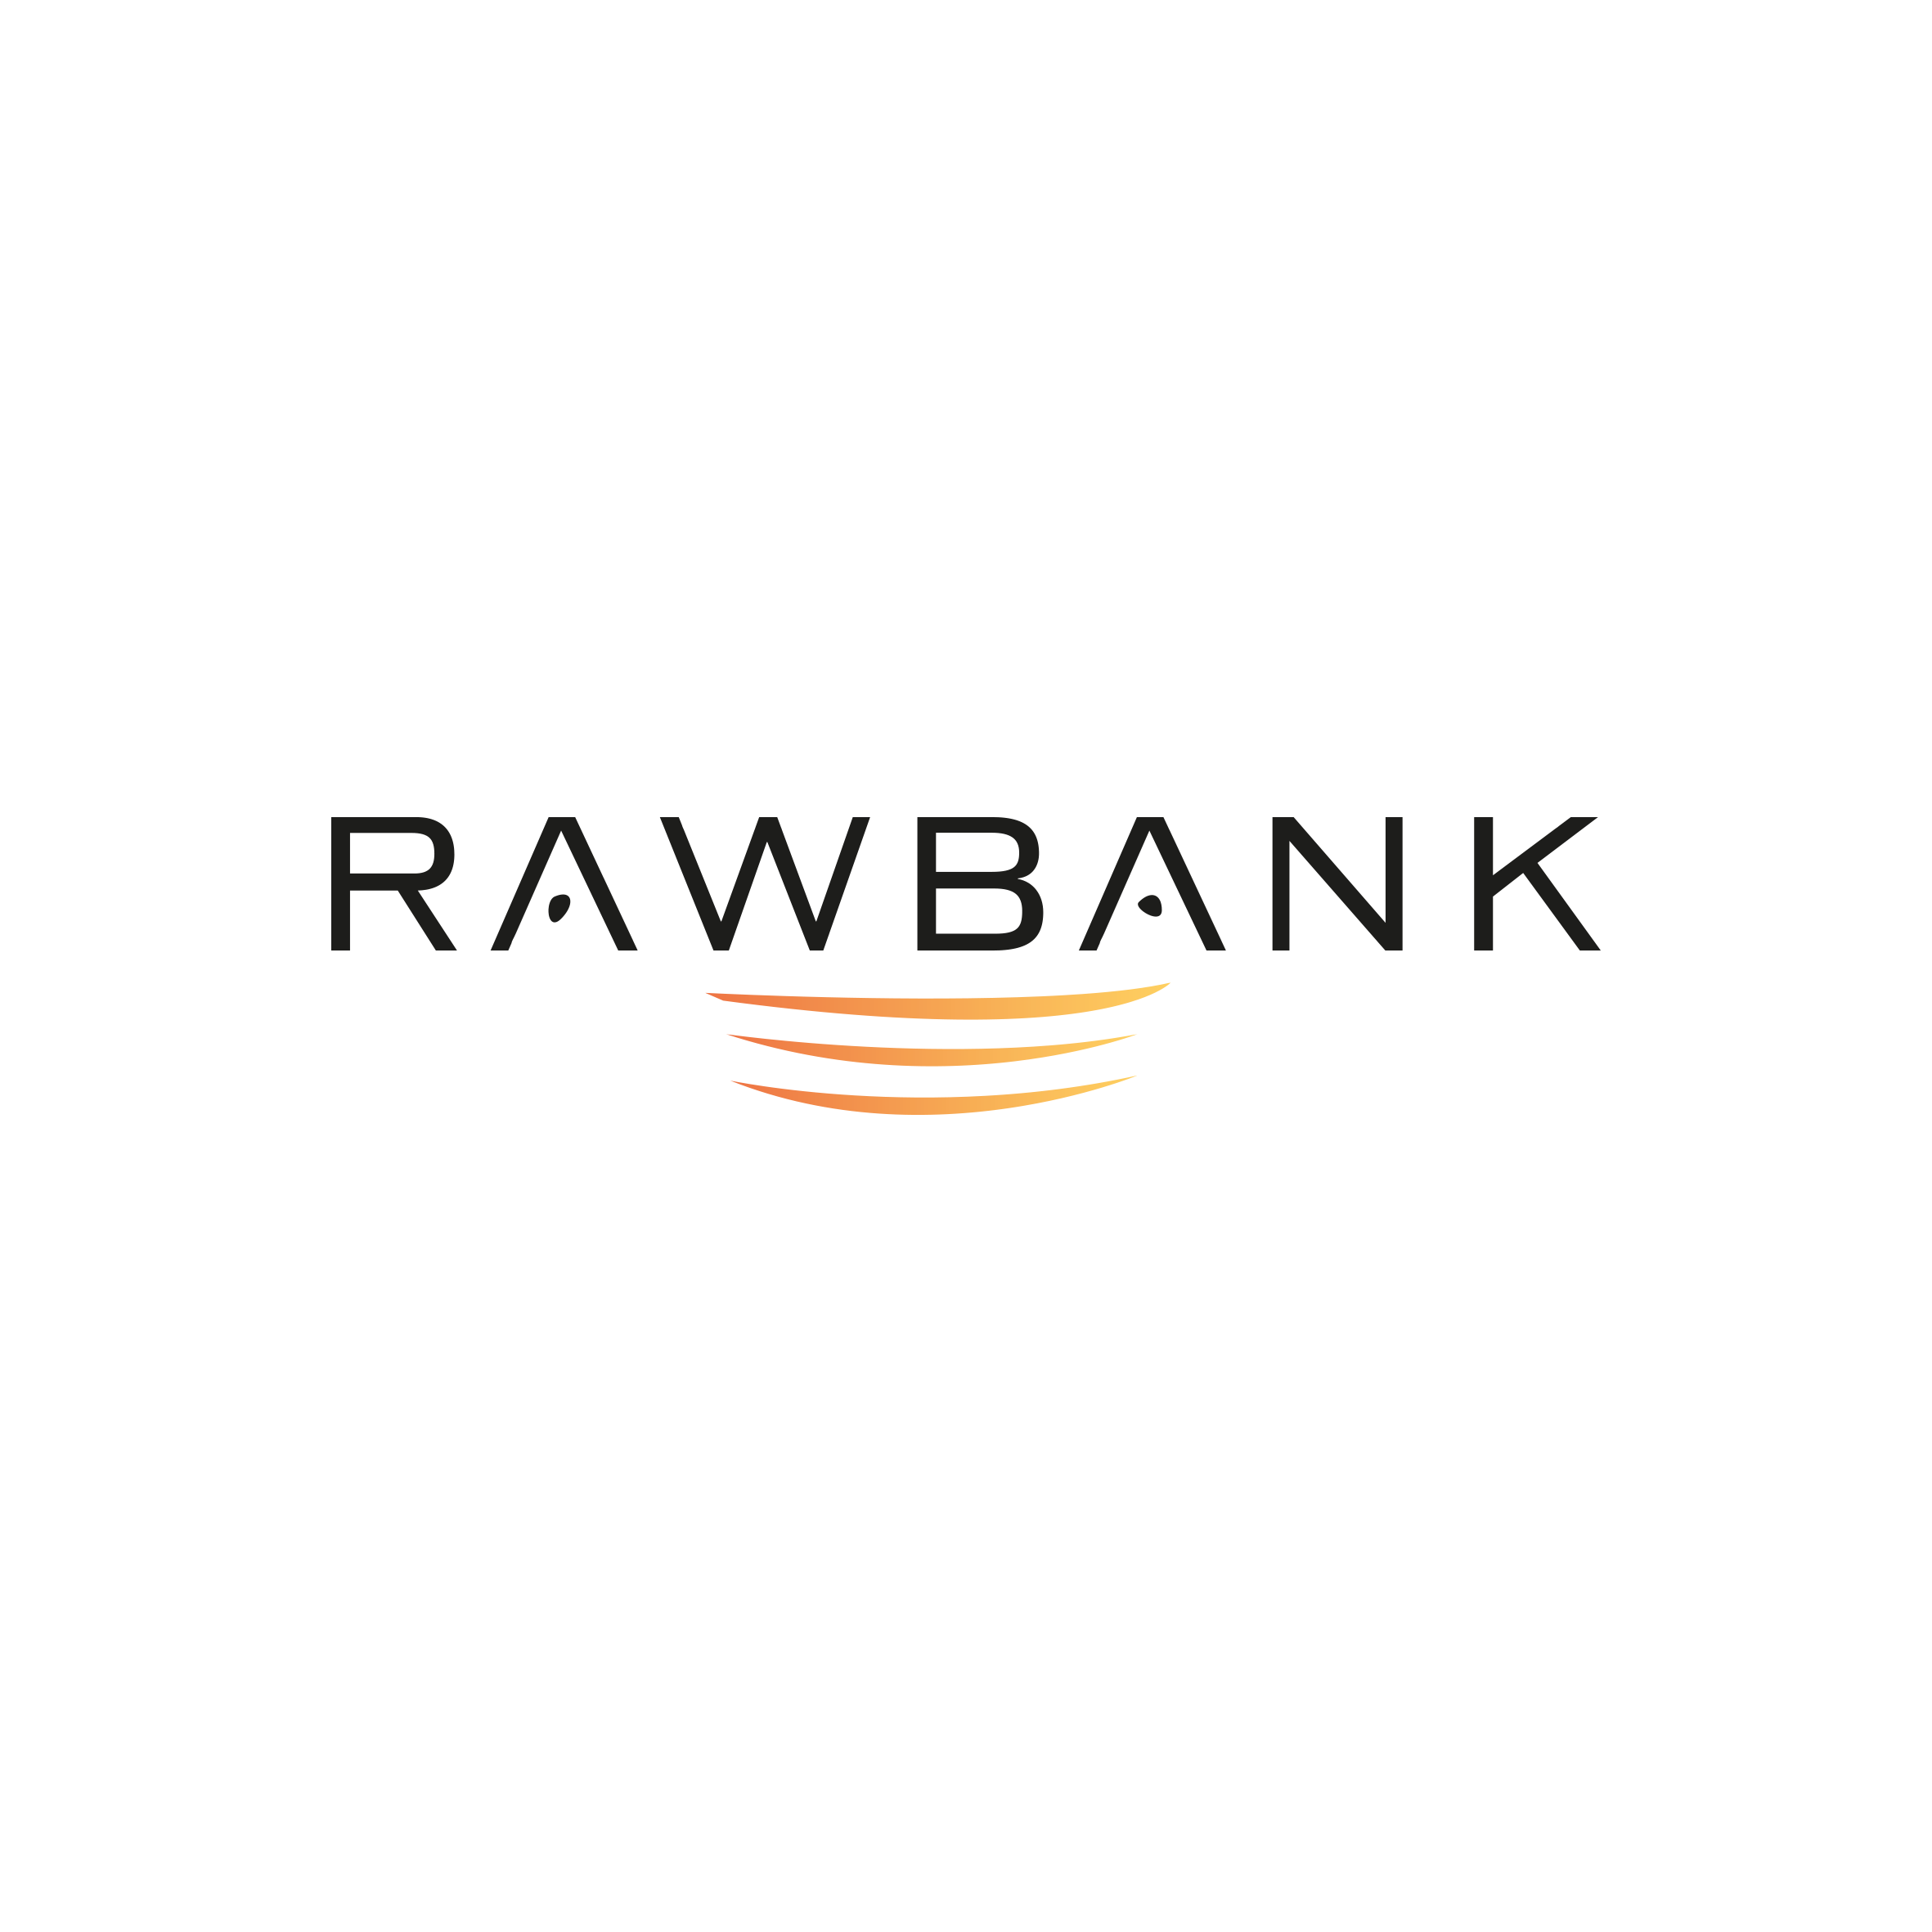 RAWBANK